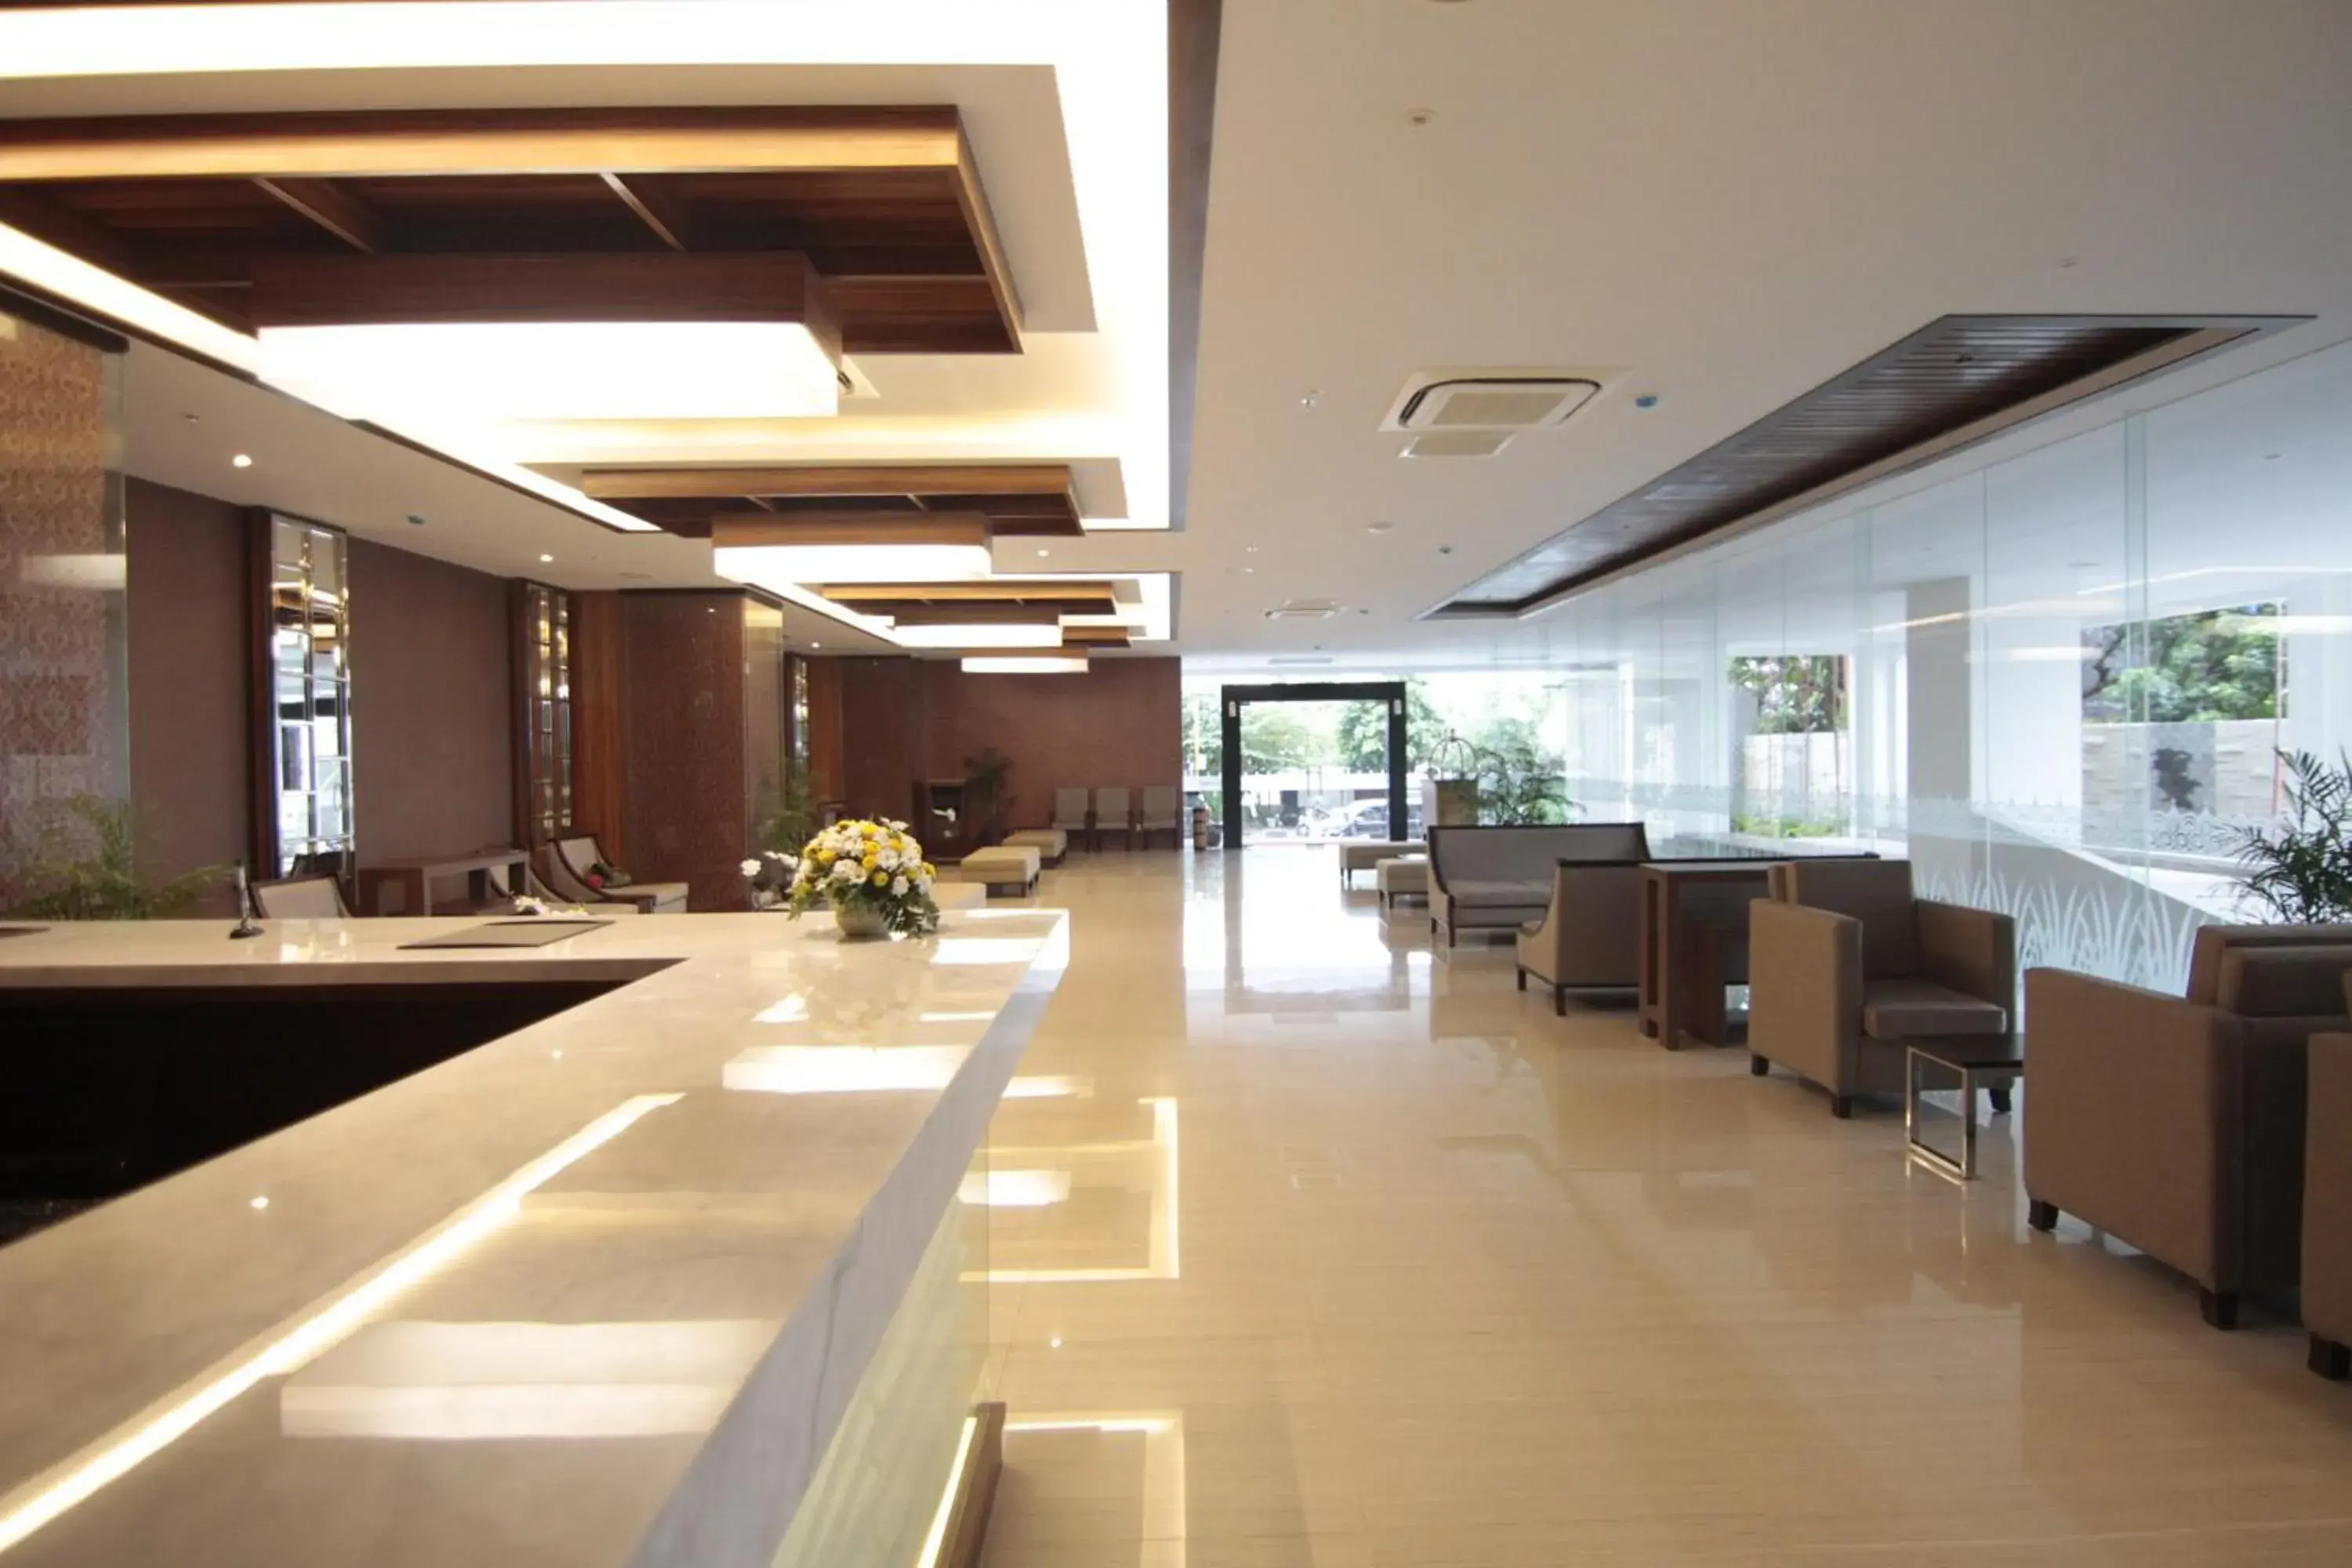 Lobby or reception in Tara Hotel Yogyakarta